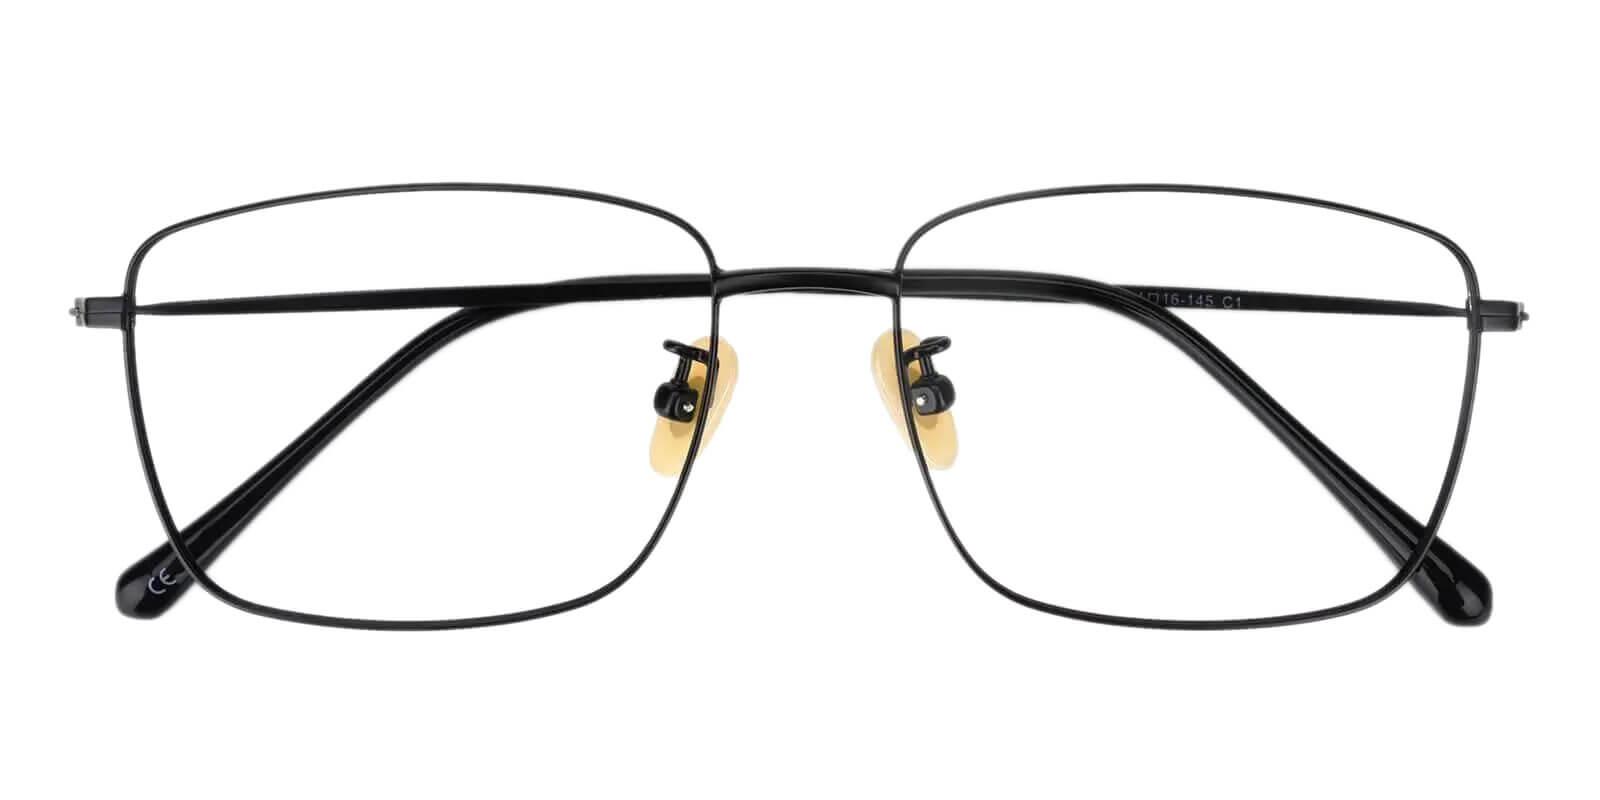 Morocco Black Titanium Eyeglasses , Lightweight , NosePads Frames from ABBE Glasses